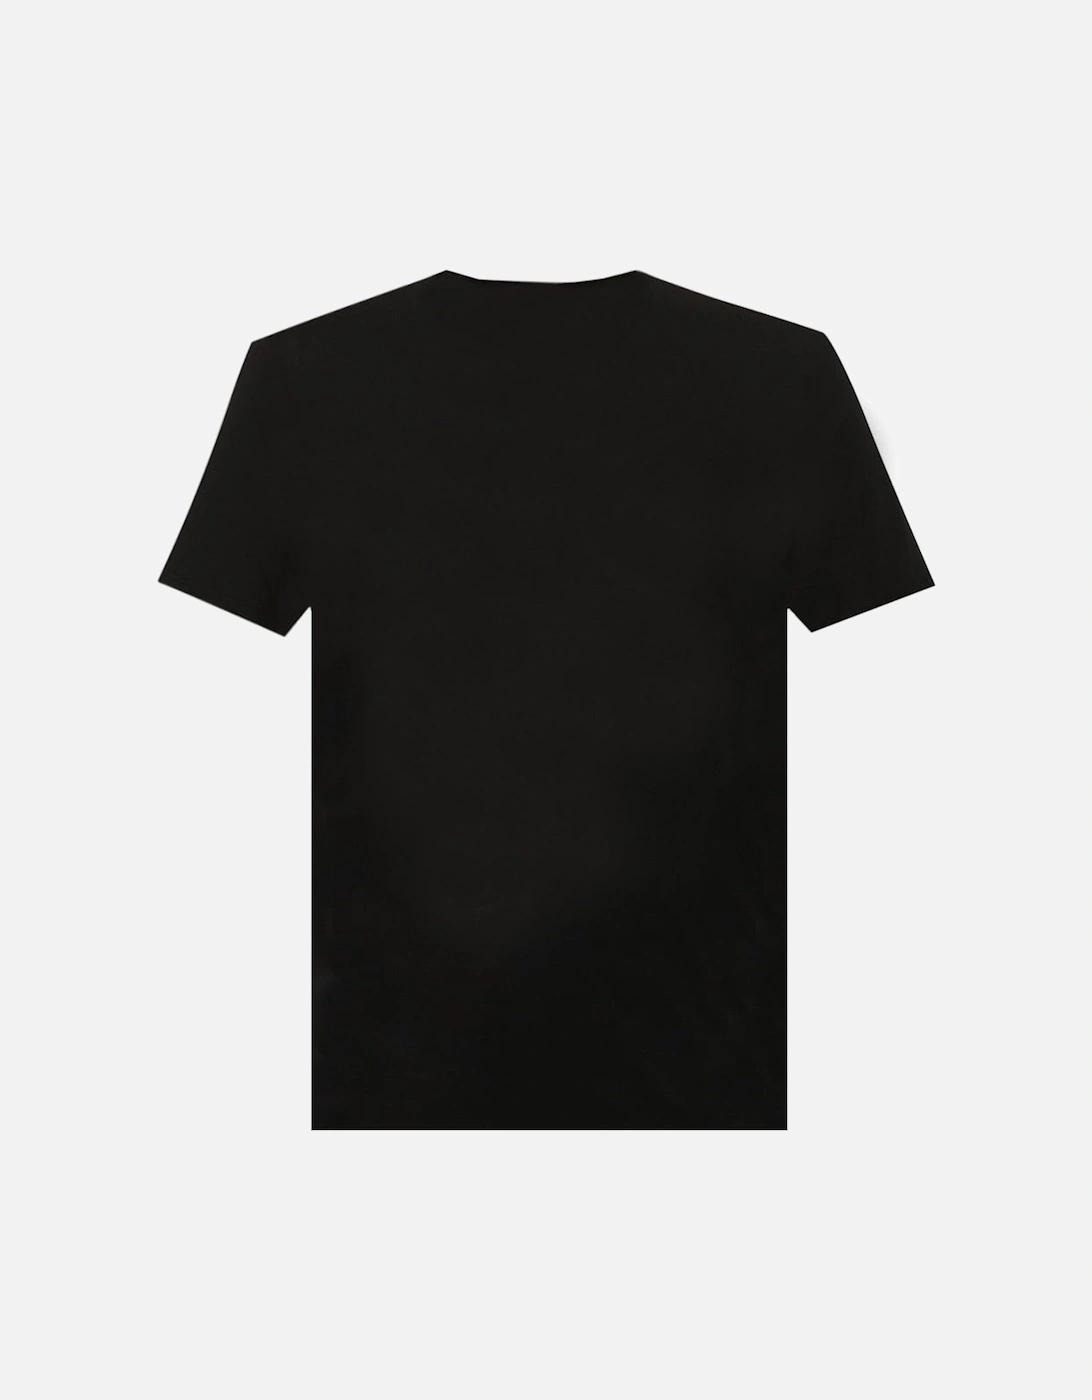 Men's Who Knew Logo T-shirt Black